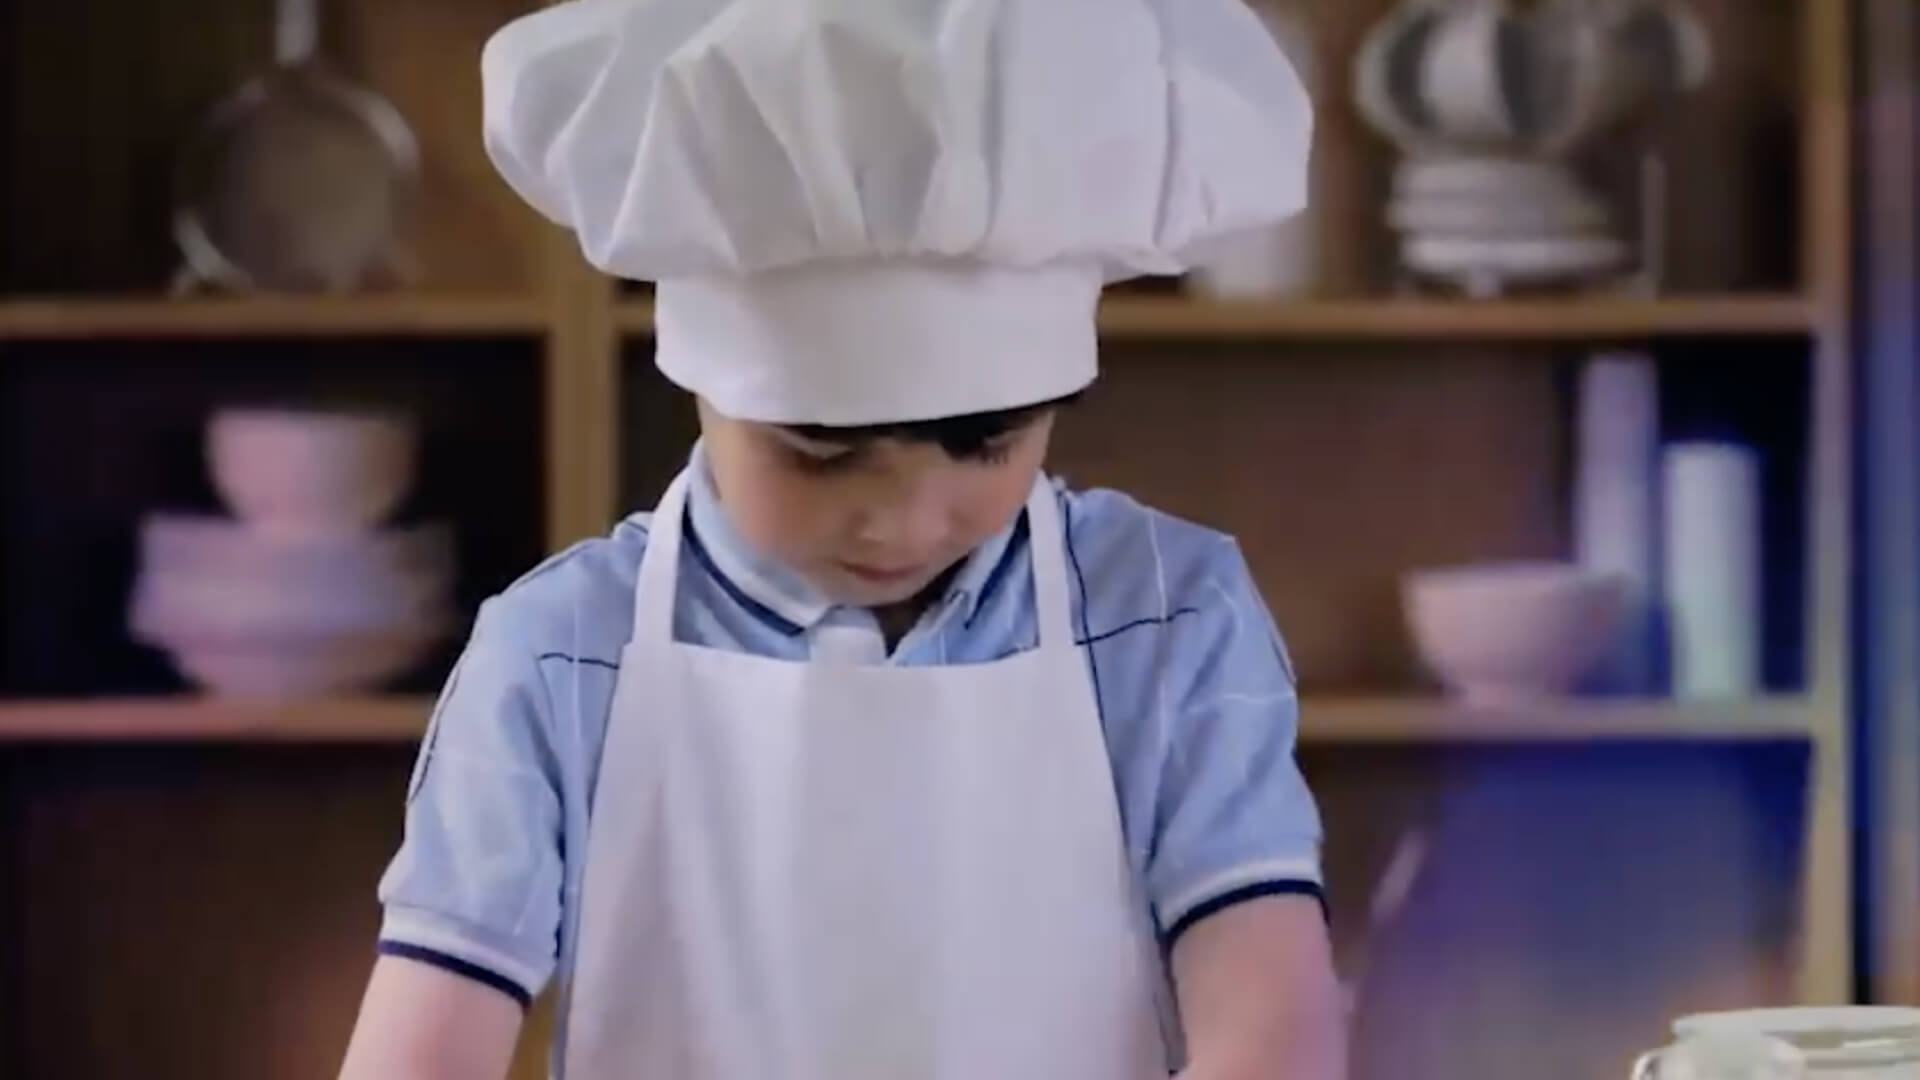 little boy cooking